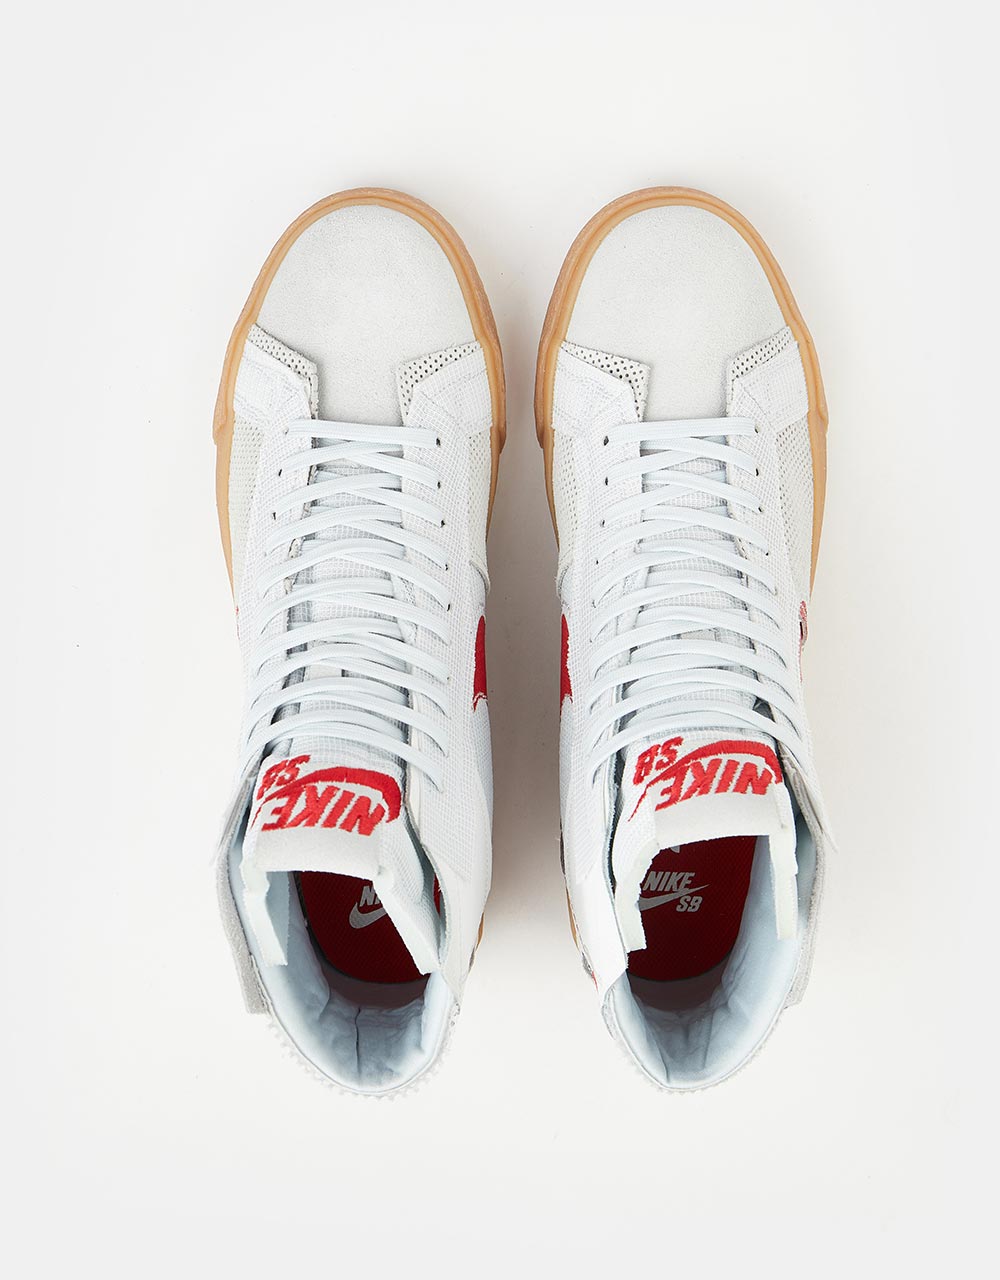 Nike SB Zoom Blazer Mid Premium Skate Shoes - Summit White/Univ Red-Pure Platinum-Summit White-Gum Yellow